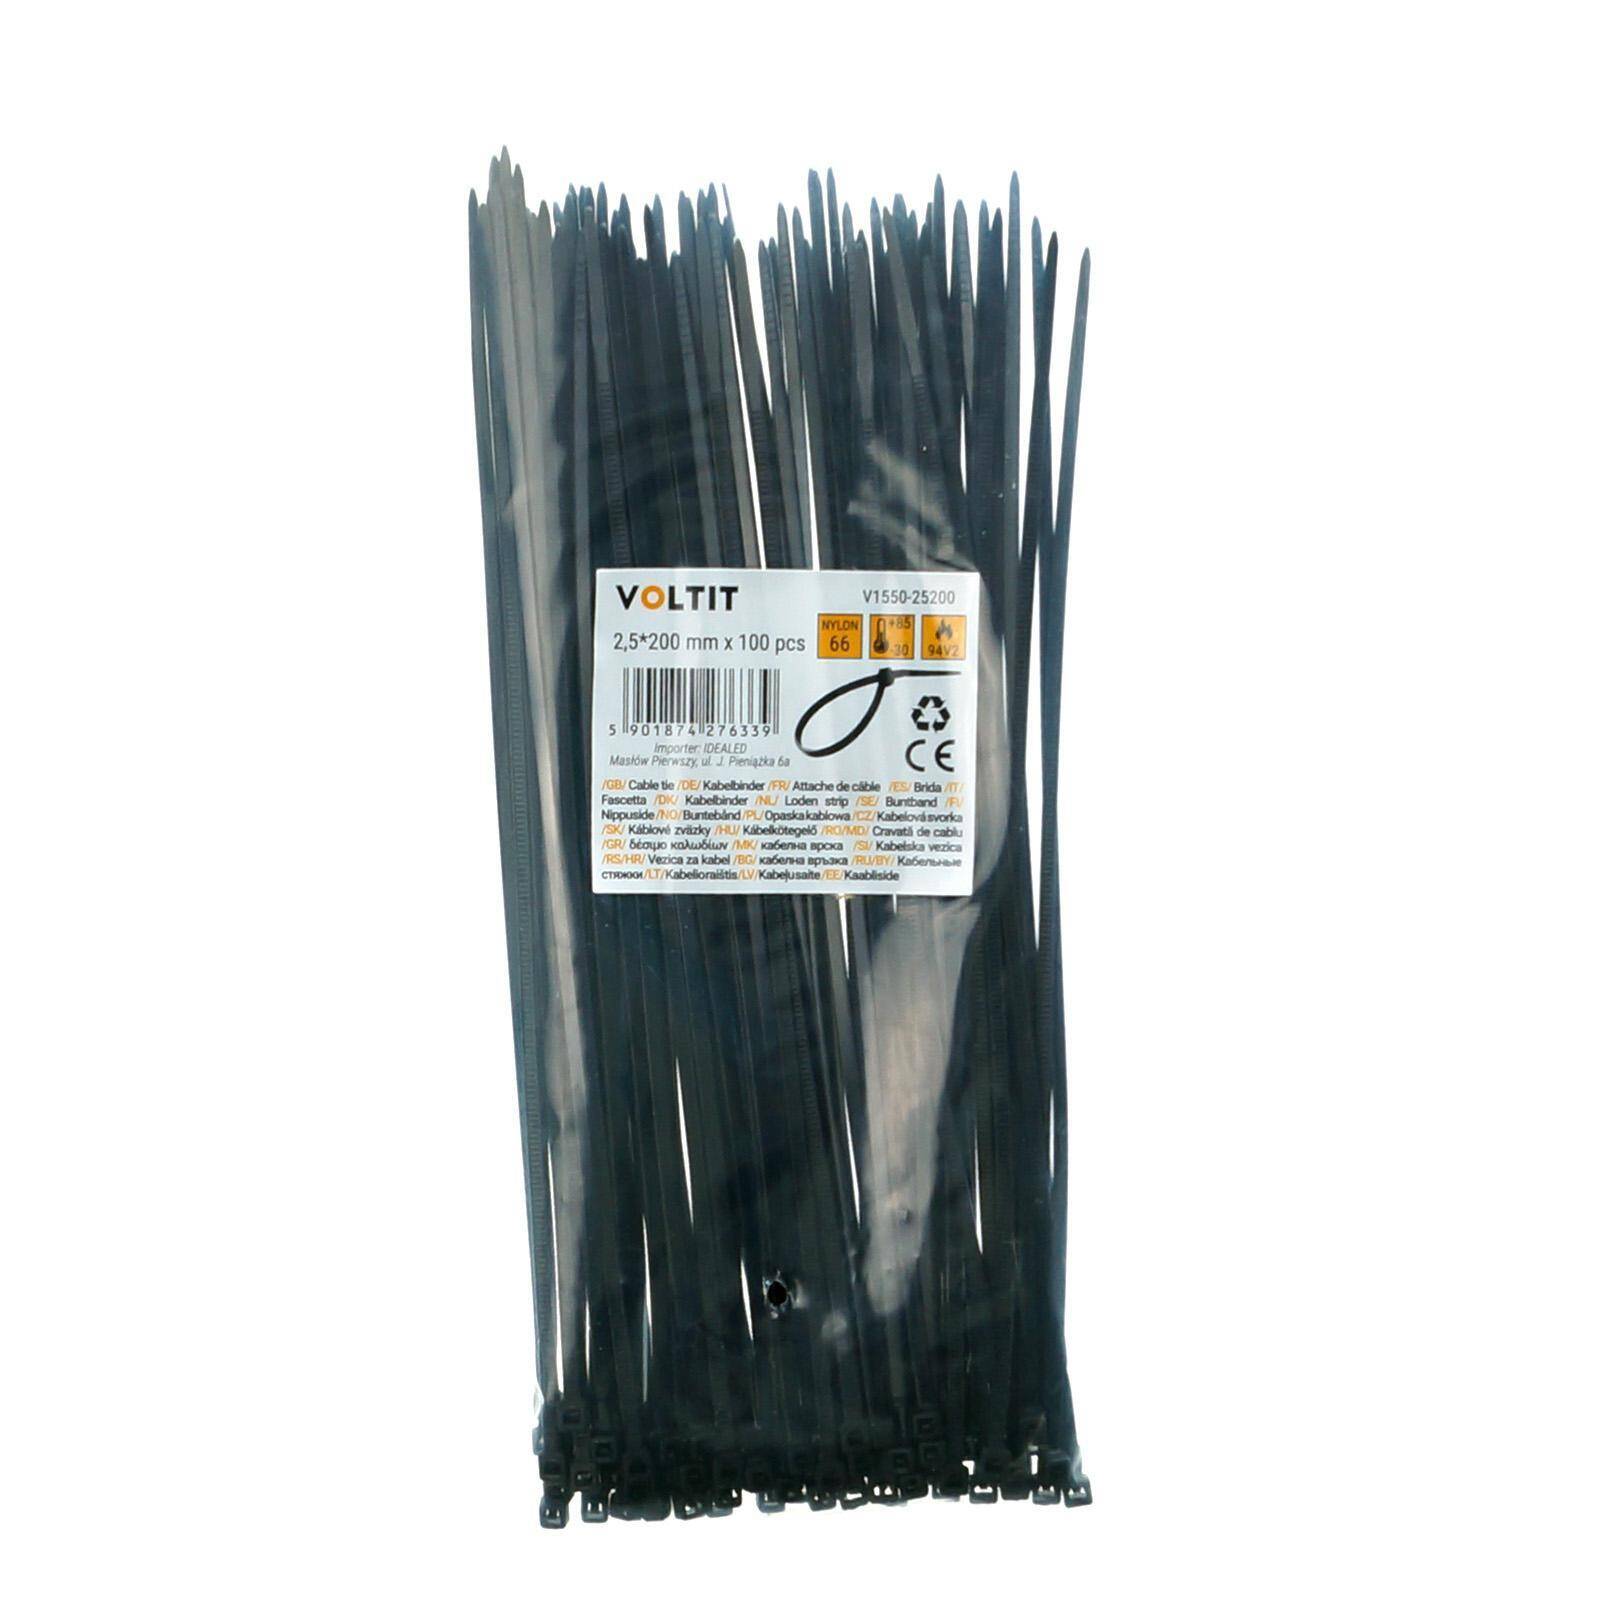 Cable tie 2,5*200 nylon 66  black